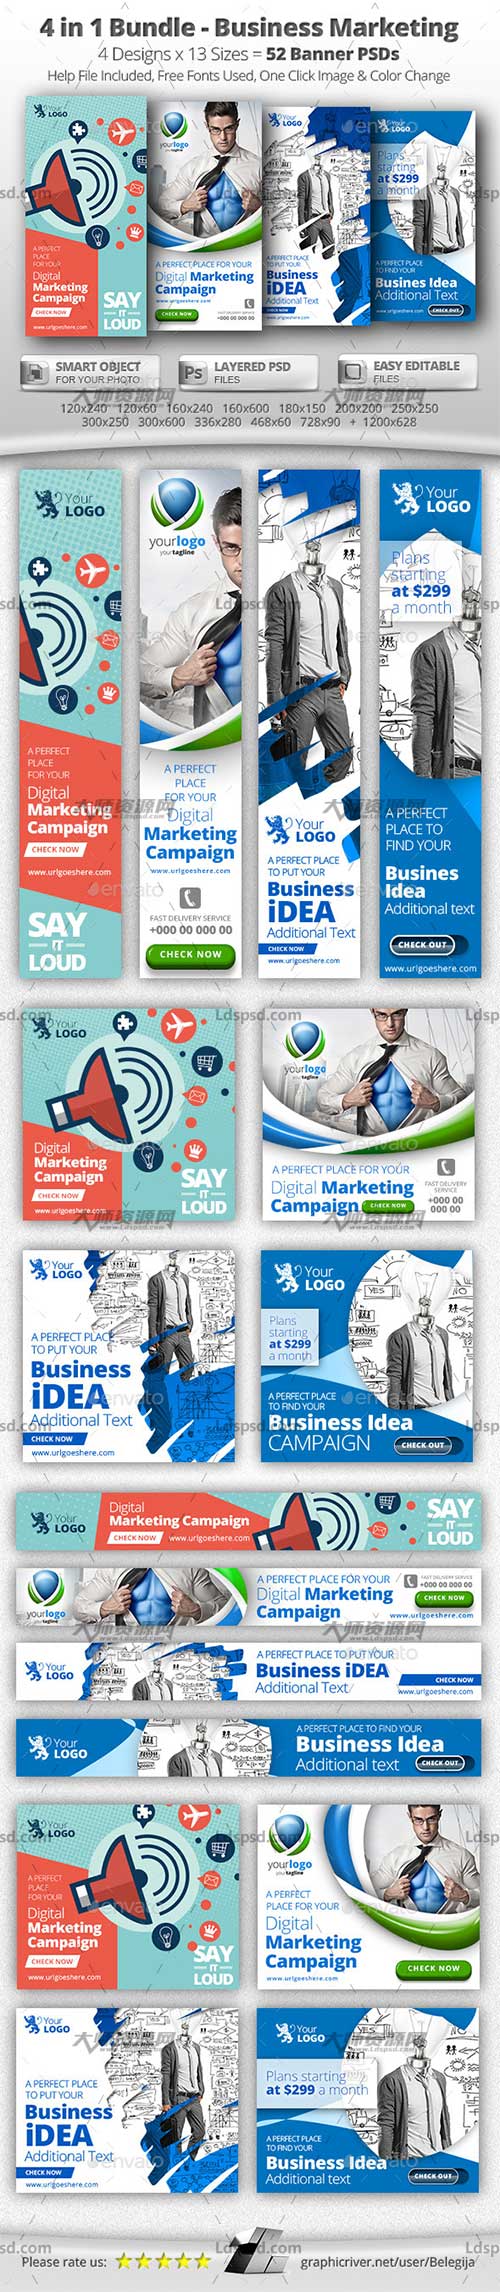 52 Business Marketing Web Banners - 4 in 1 Bundle,网店对联/横幅广告模板(服装类/4套)